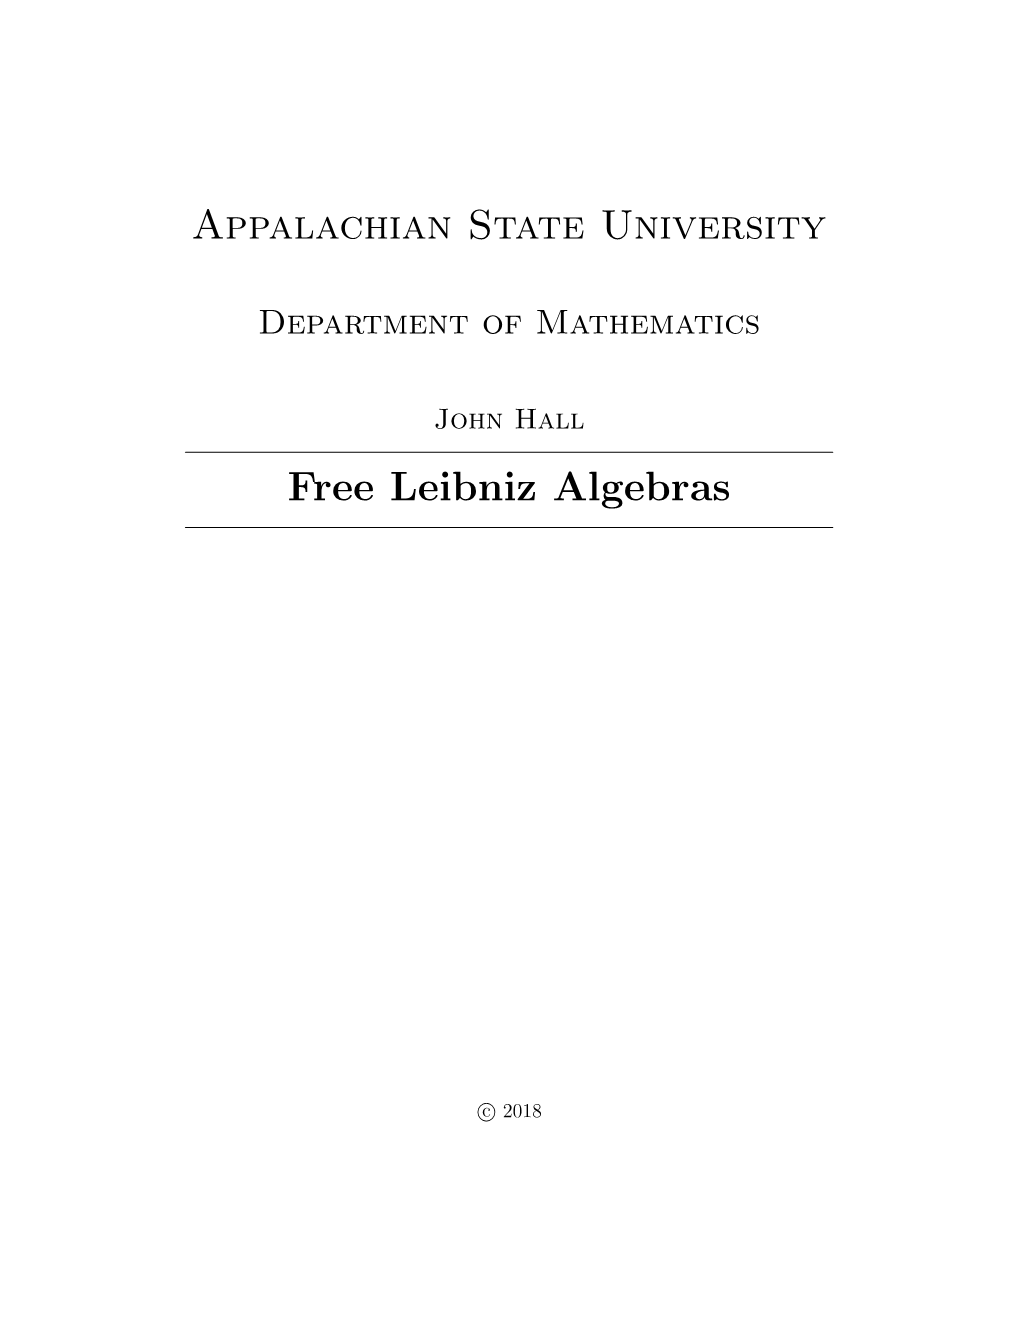 Free Leibniz Algebras